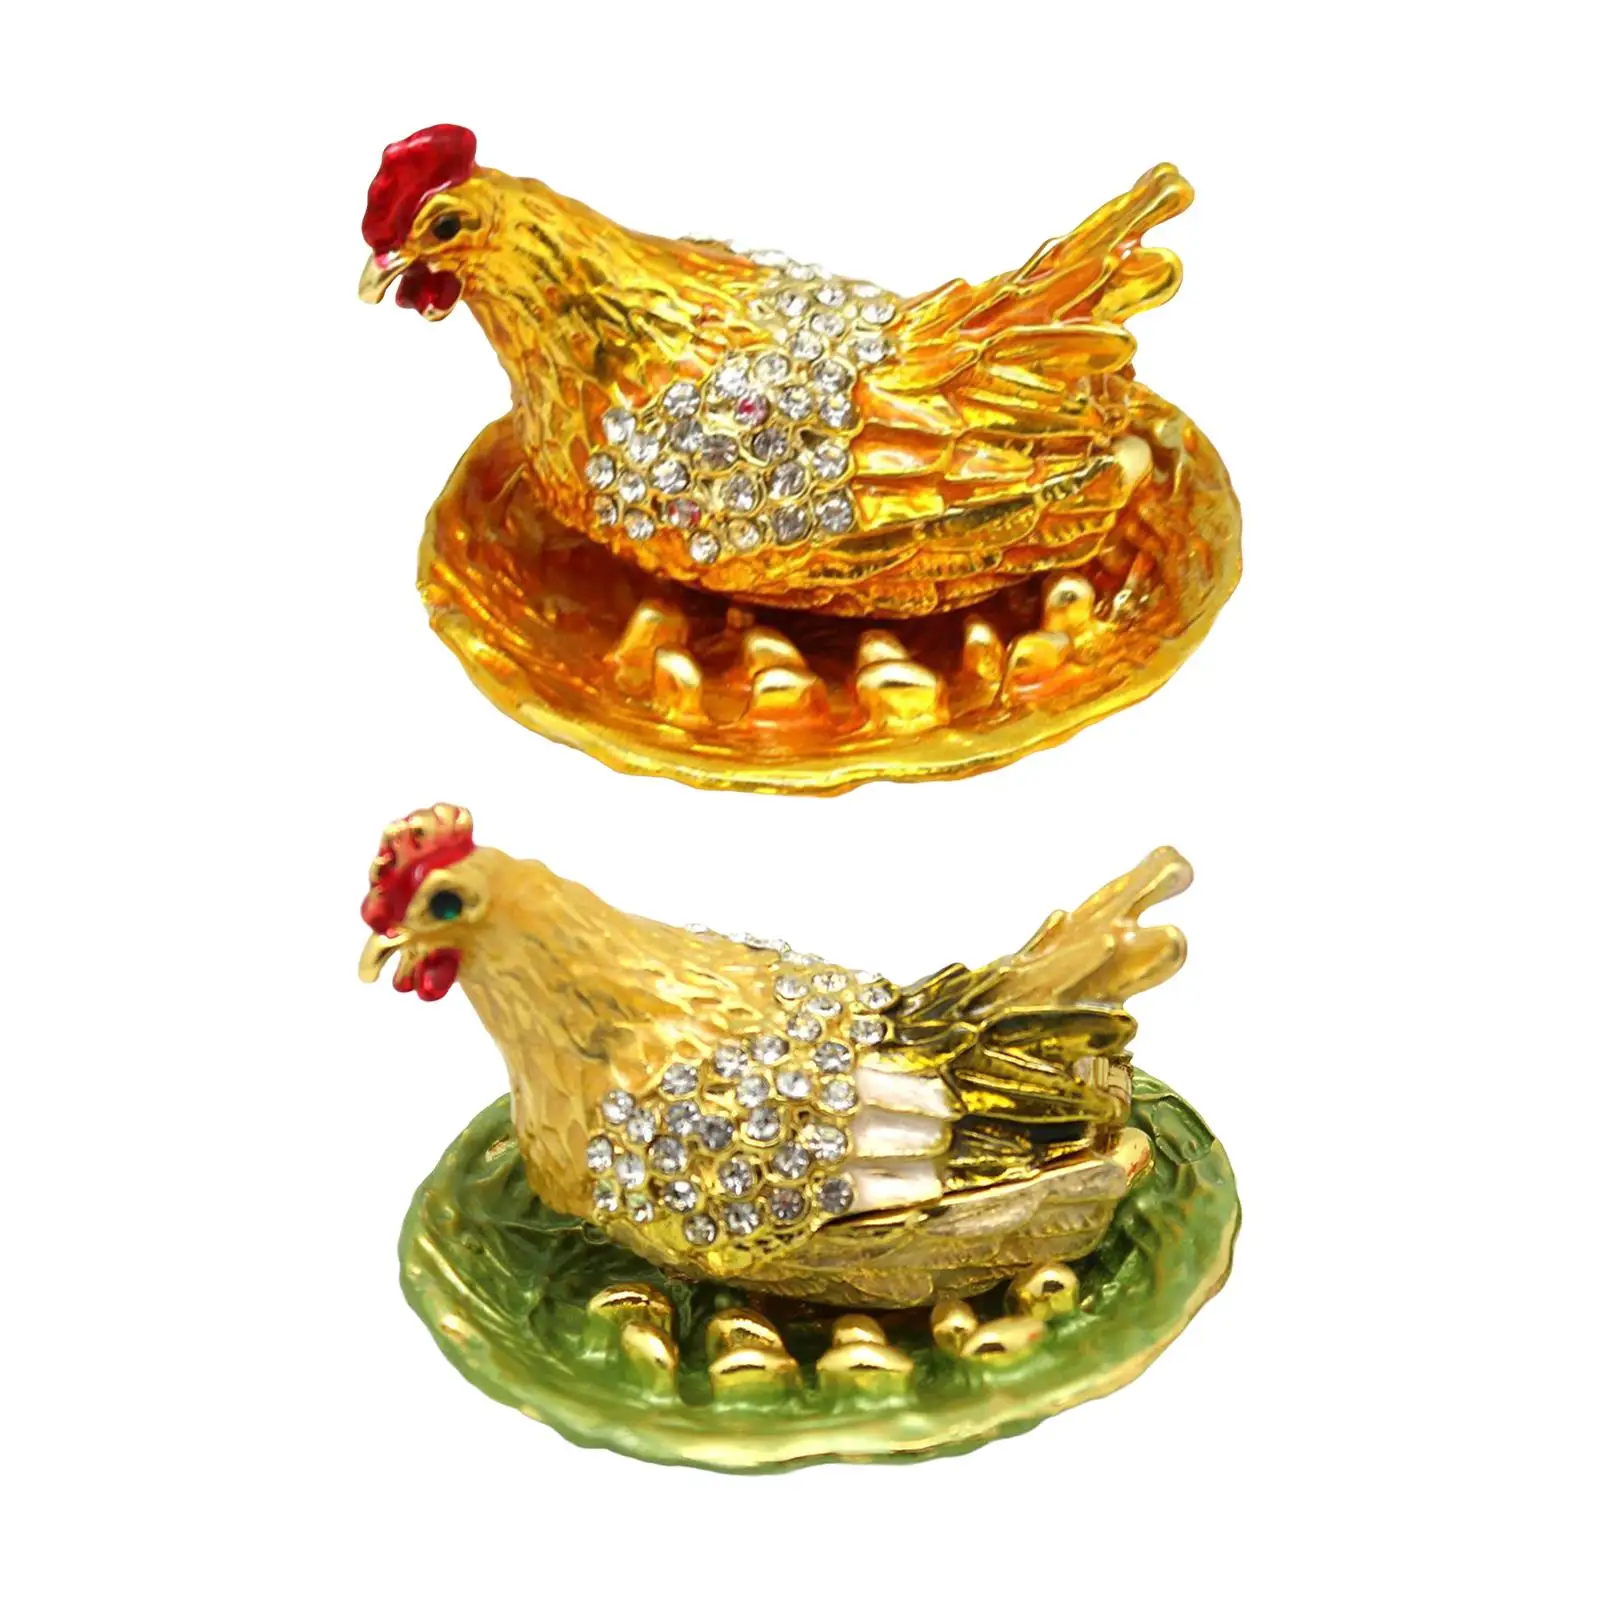 

Chicken Trinket Box Jewelry Organizer Decoration Handmade Decorative 2.5x1.7inch for Bedside, Dresser Decor Home Decor